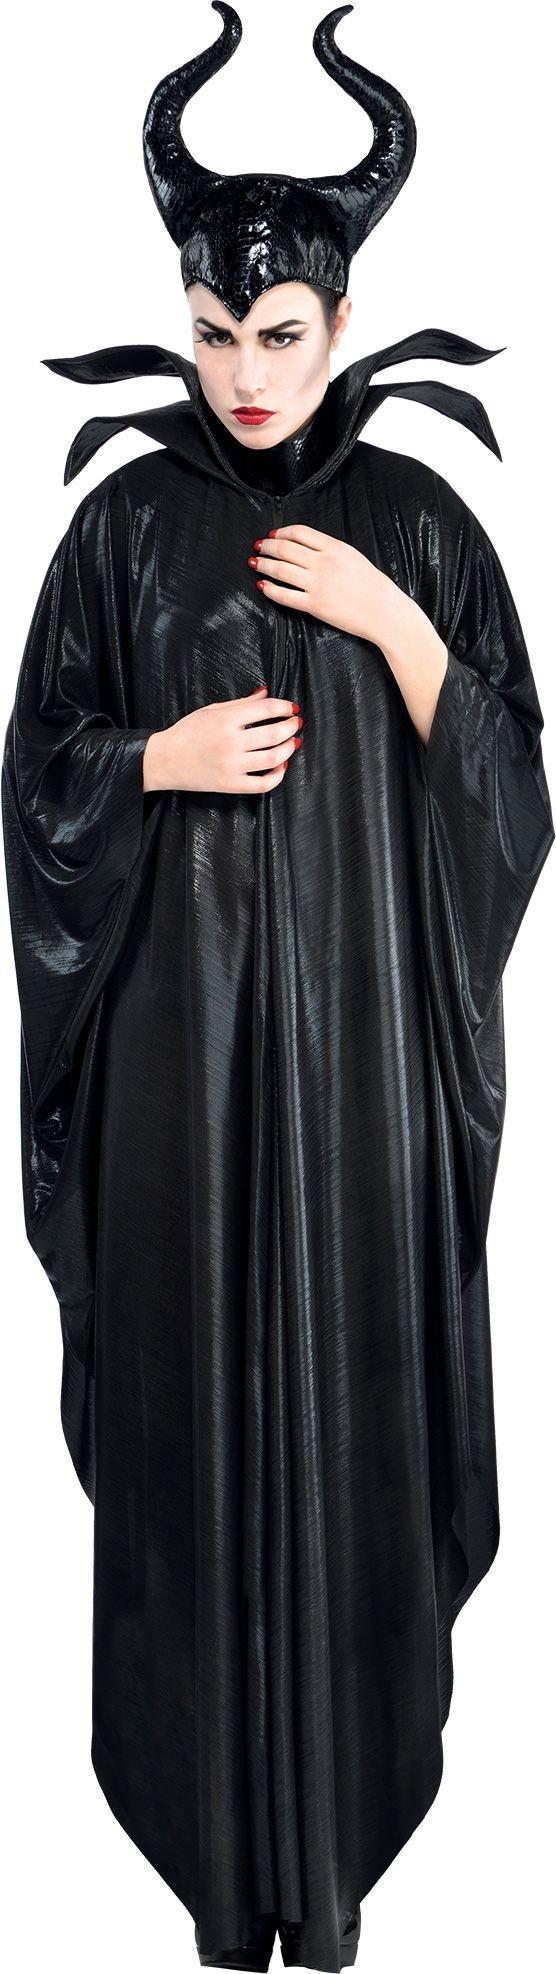 Disney Adult Classic Maleficent Costume